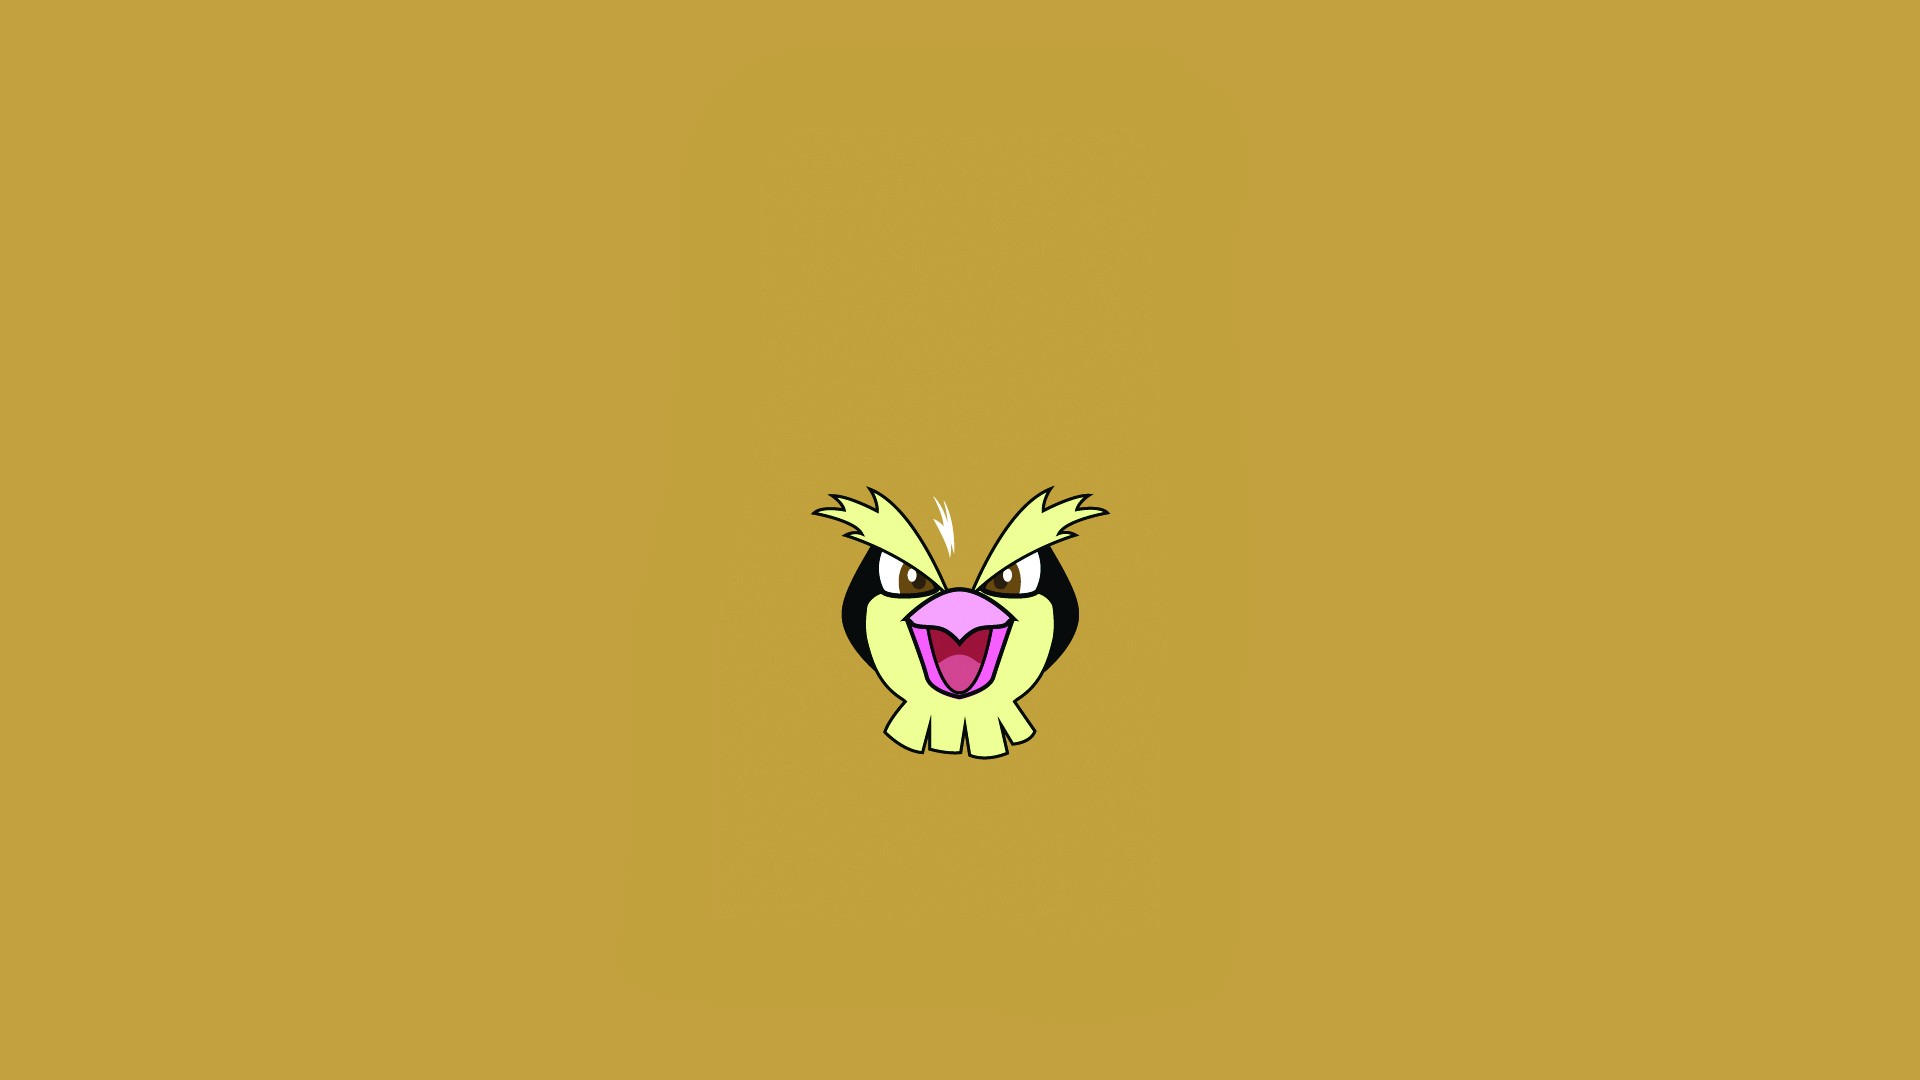 Anime 1920x1080 Pokémon minimalism anime yellow background simple background